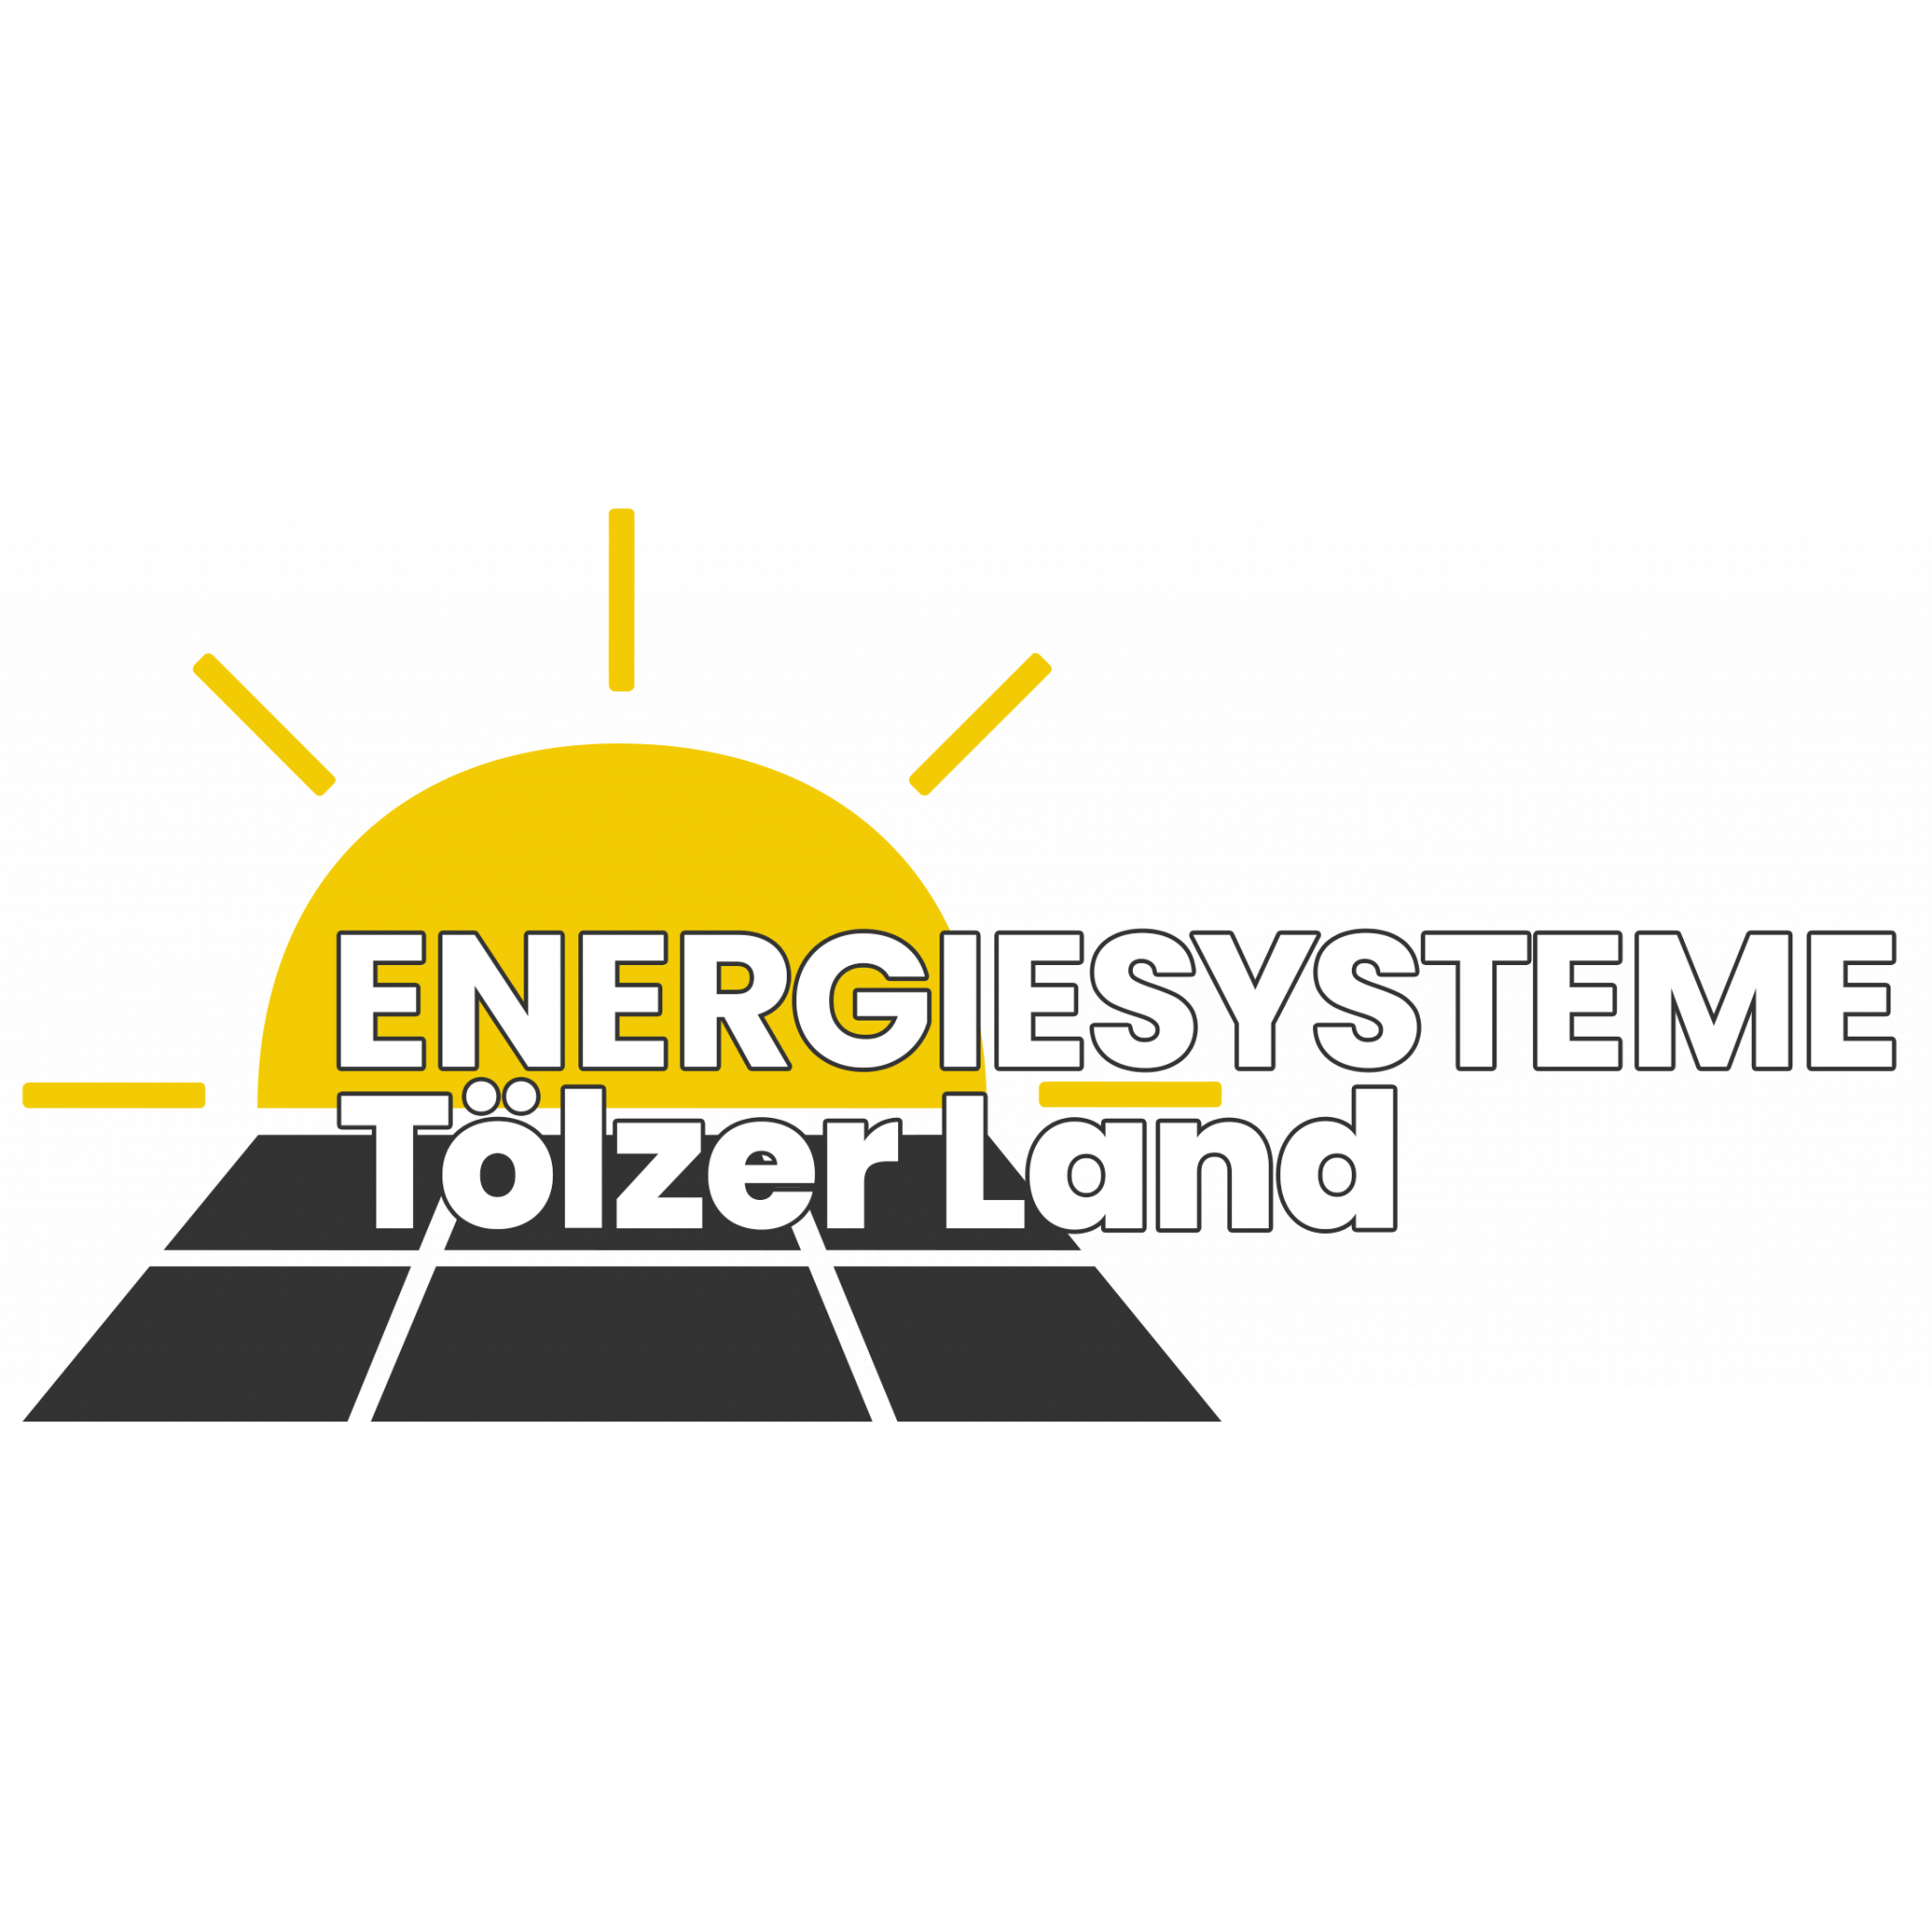 Energiesysteme Tölzer Land in Bad Tölz - Logo